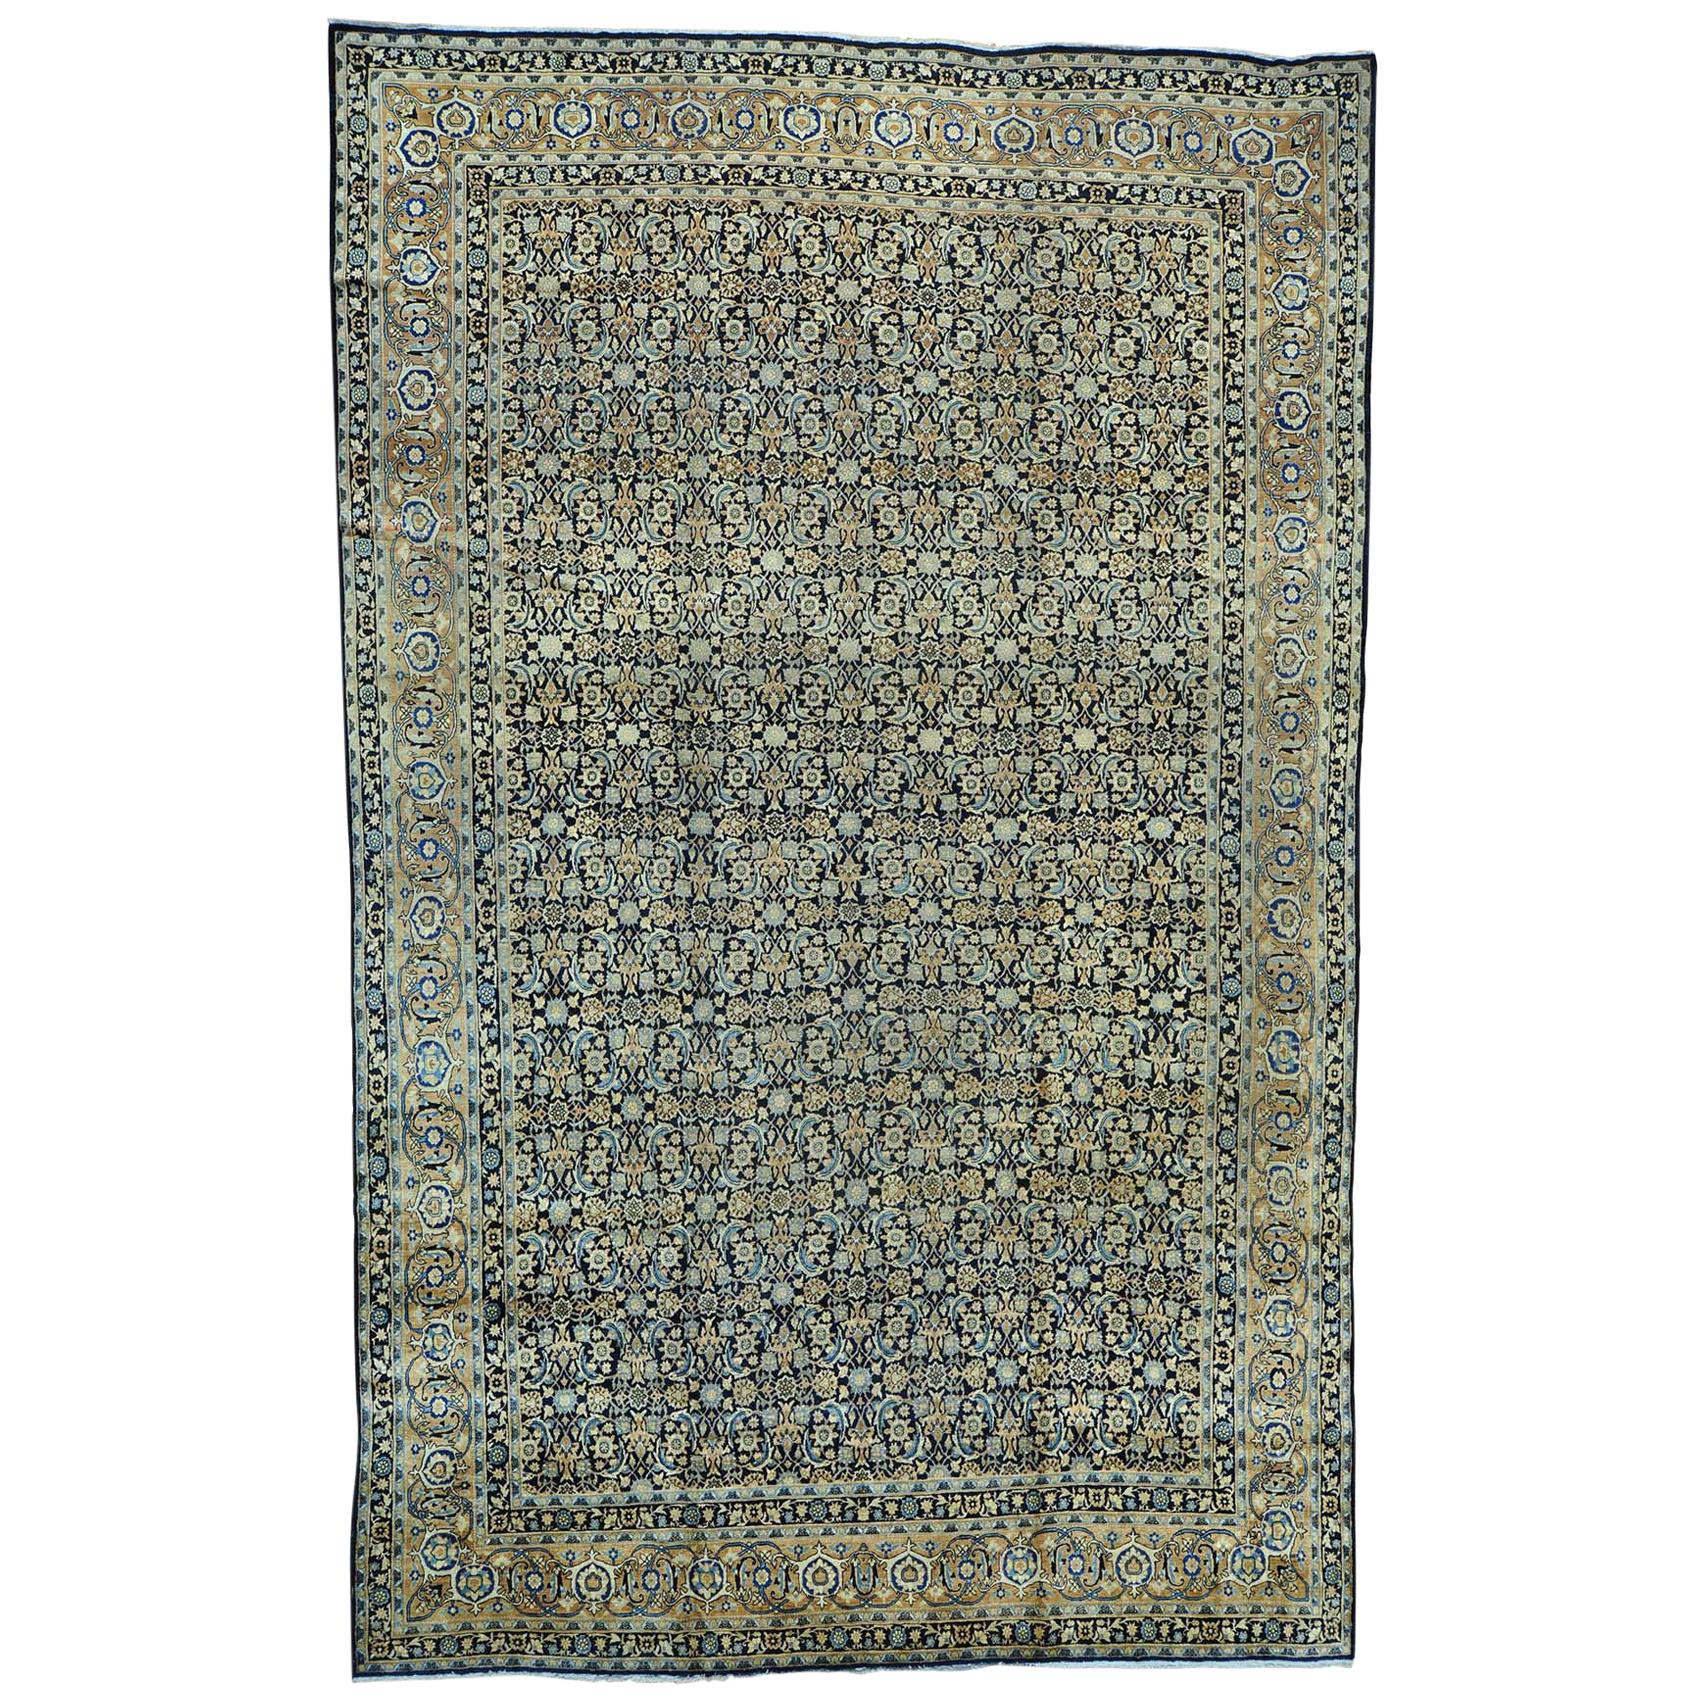 Gallery Size Antique Persian Kerman Herati Design Rug For Sale